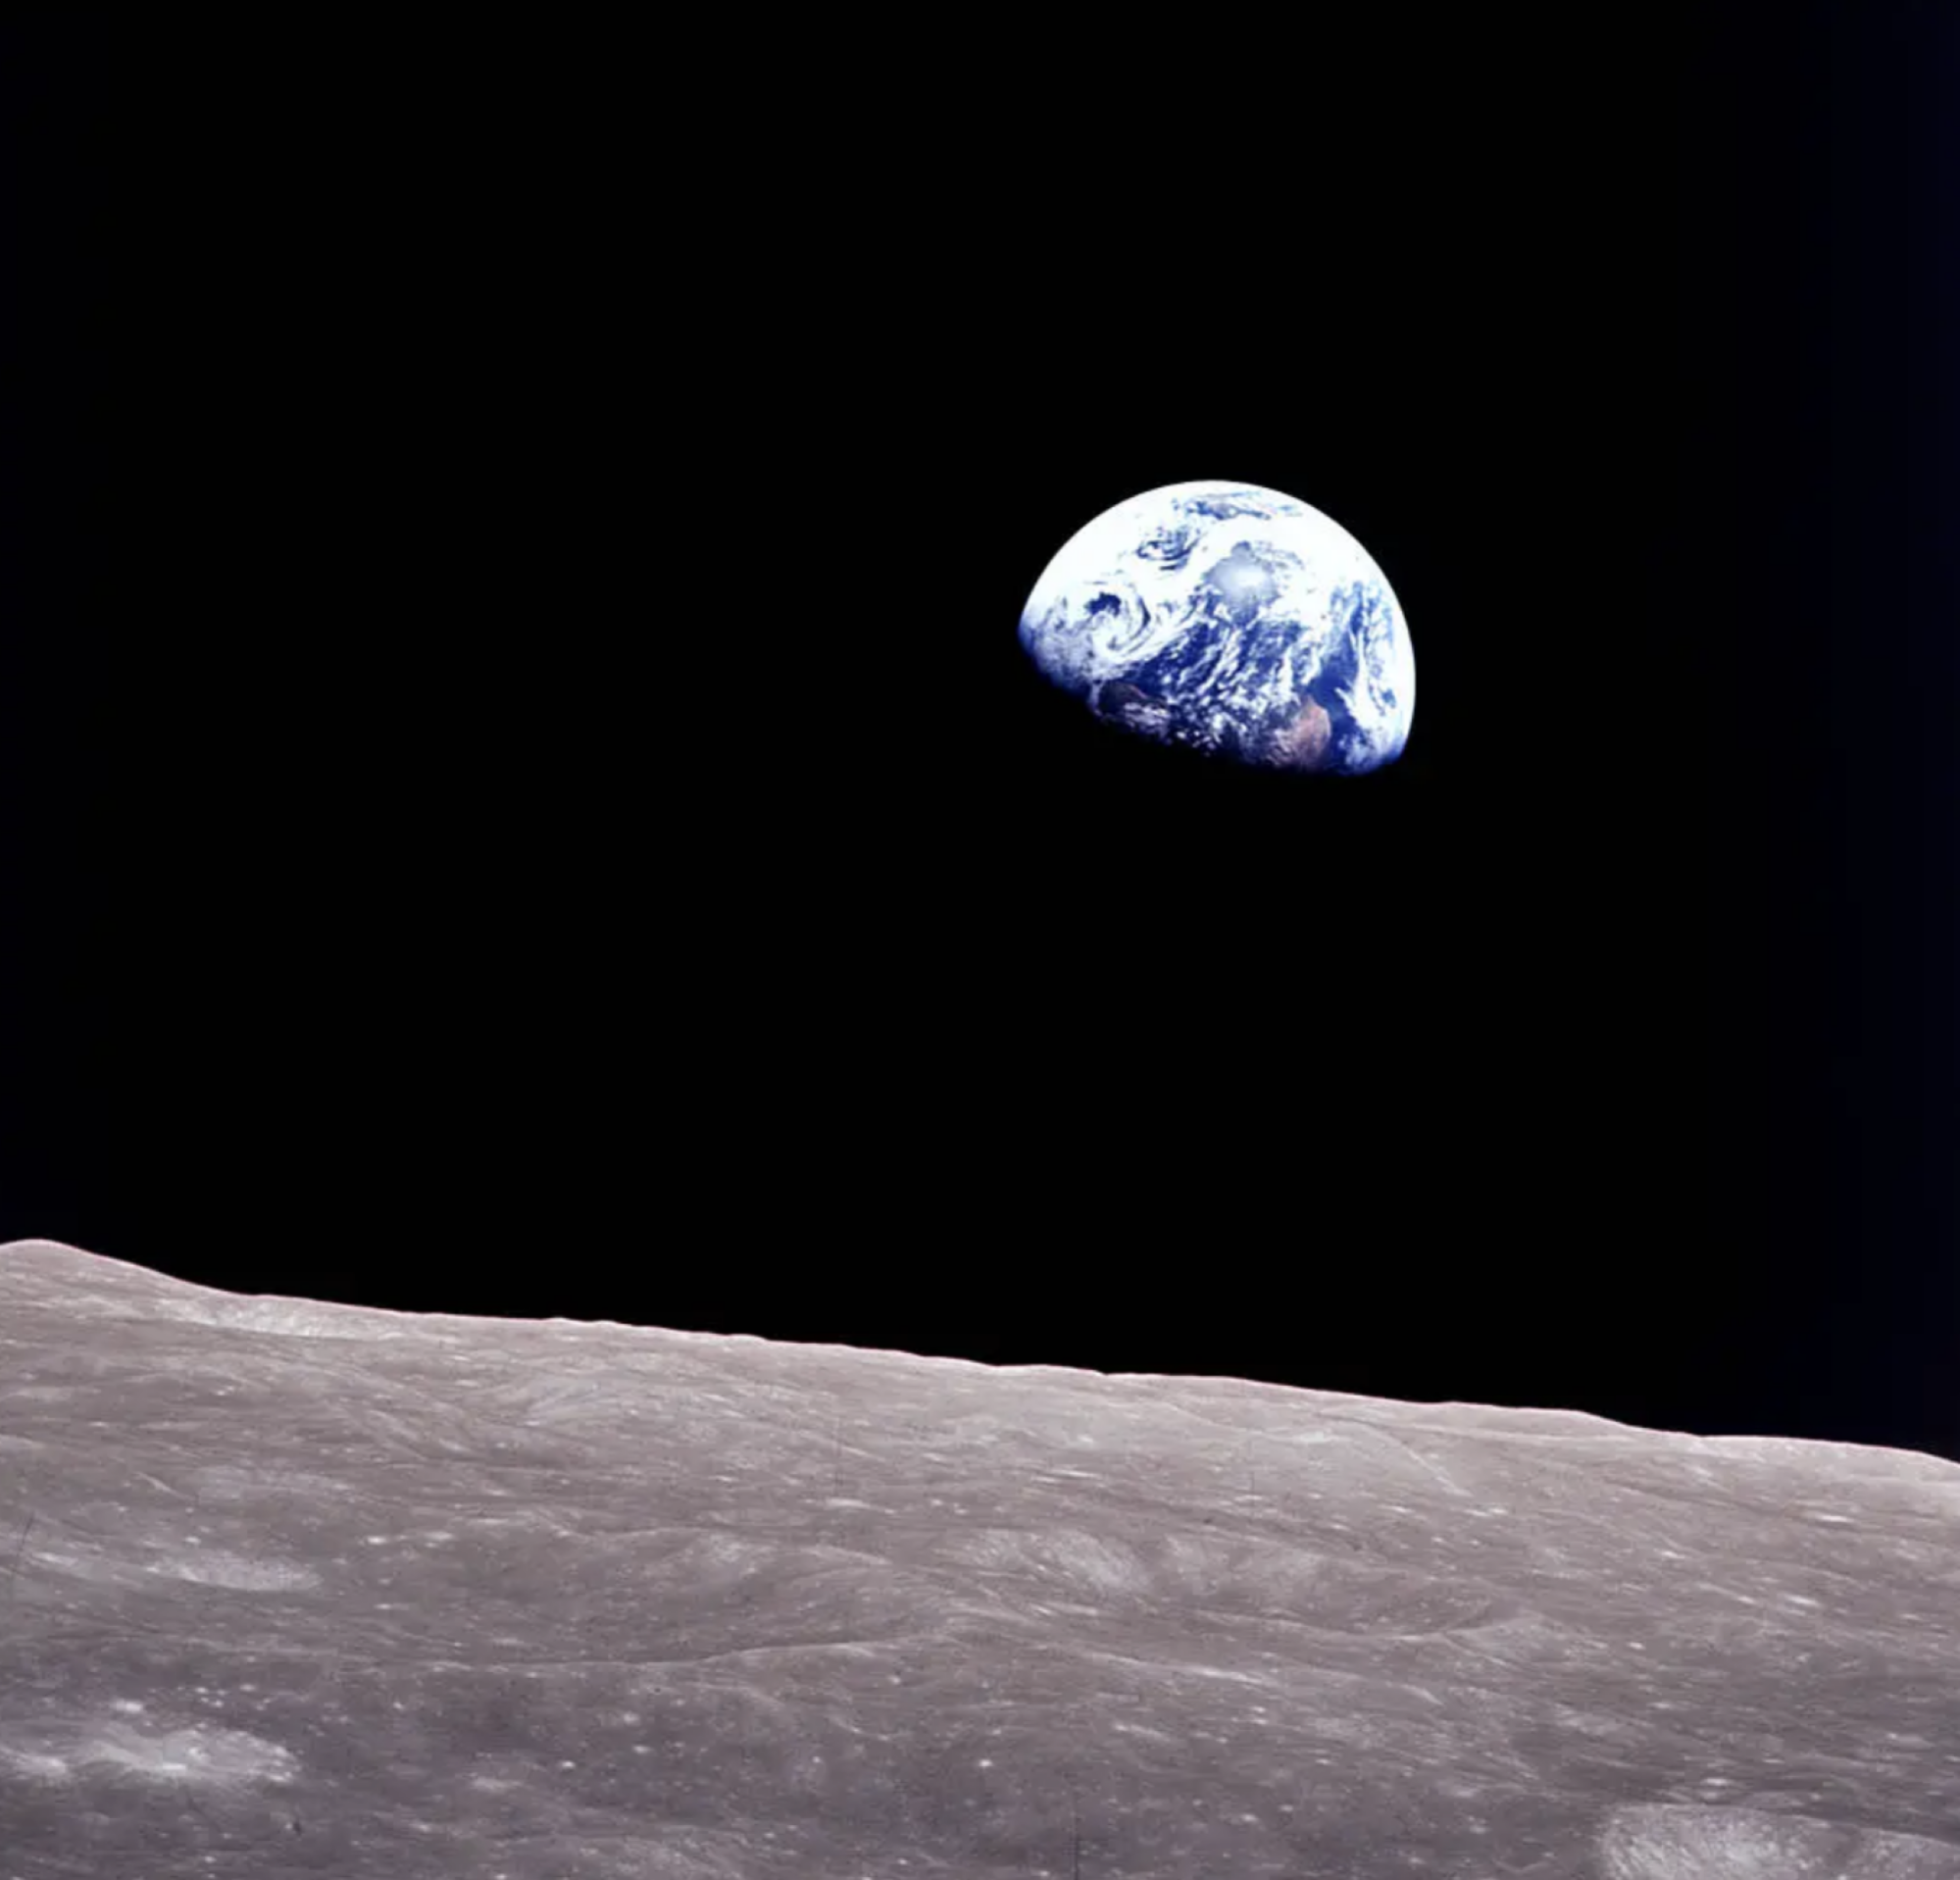 The iconic "Earthrise" photo captured by NASA's Apollo 8 crew.